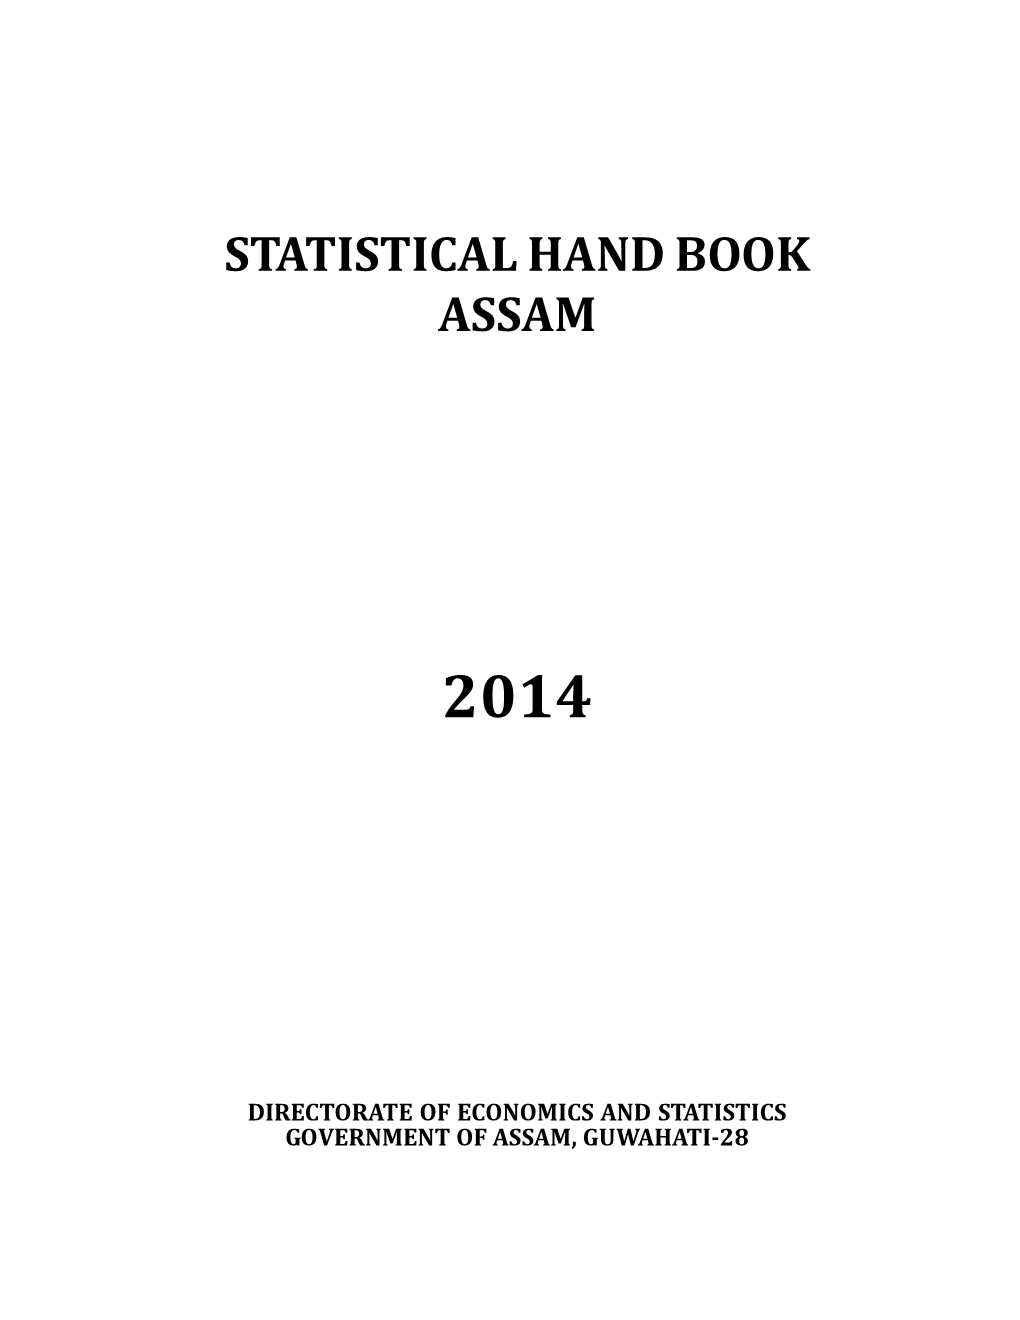 Statistical Hand Book Assam